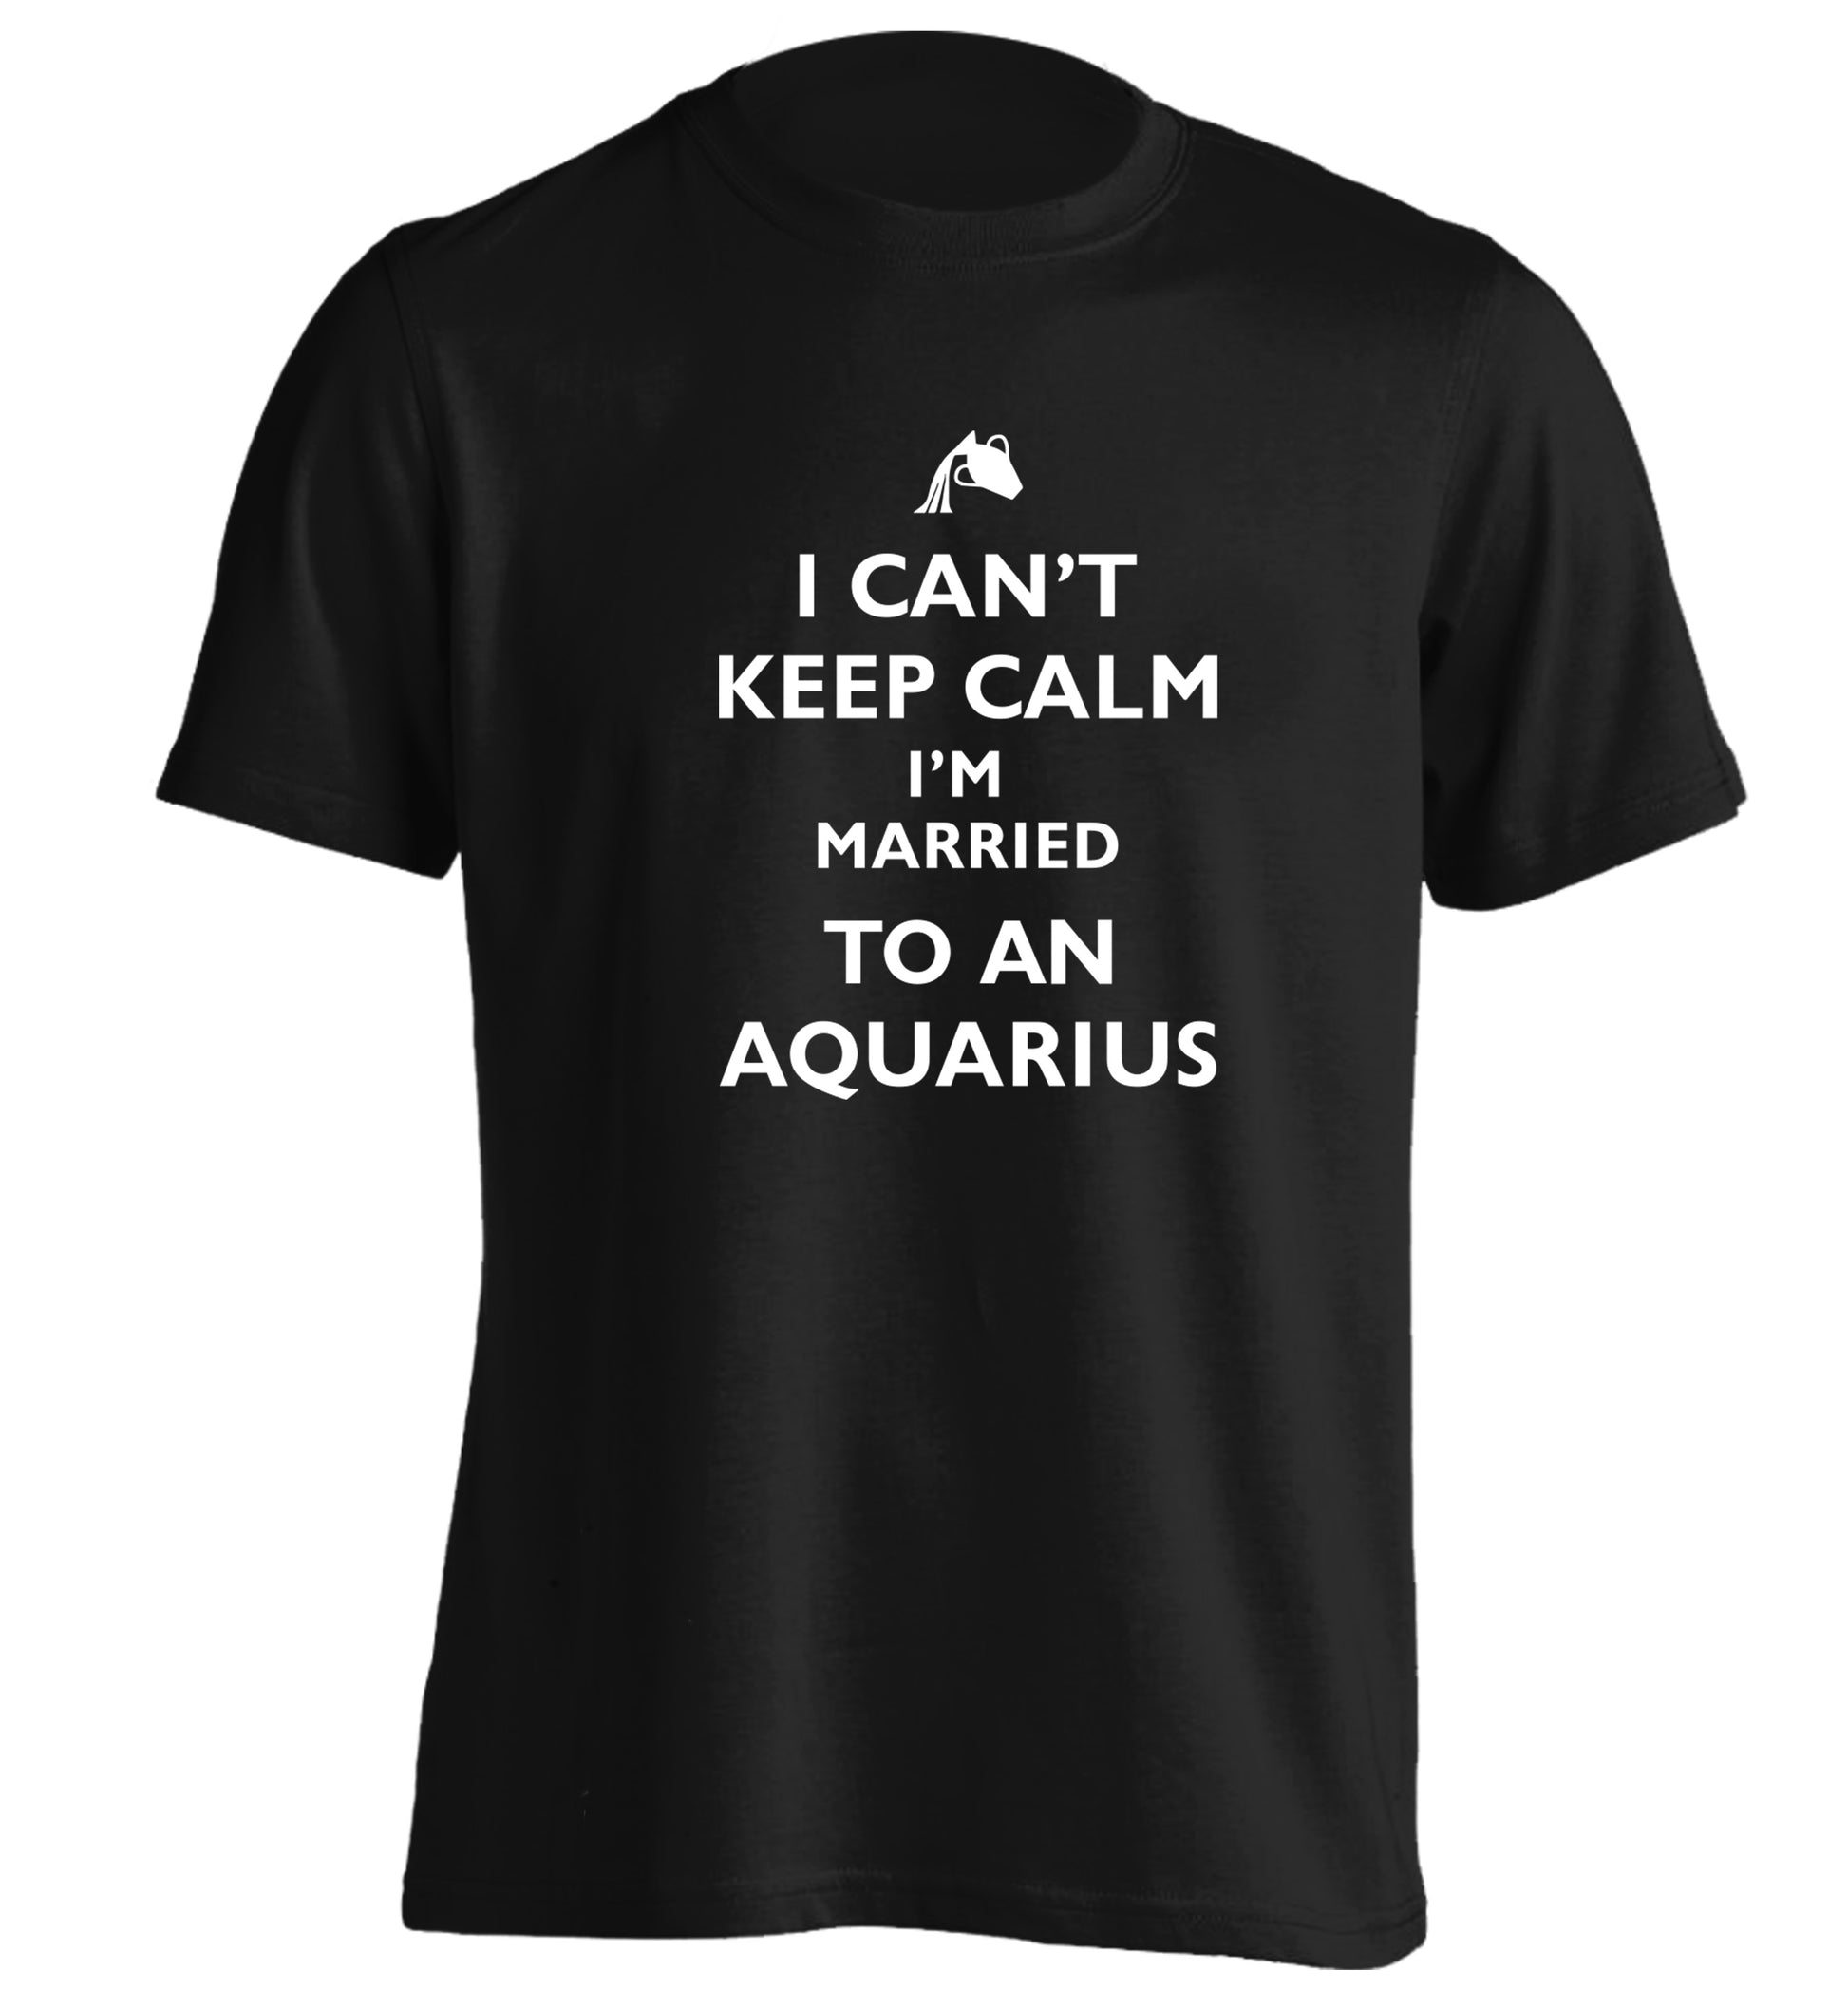 I can't keep calm I'm married to an aquarius adults unisex black Tshirt 2XL